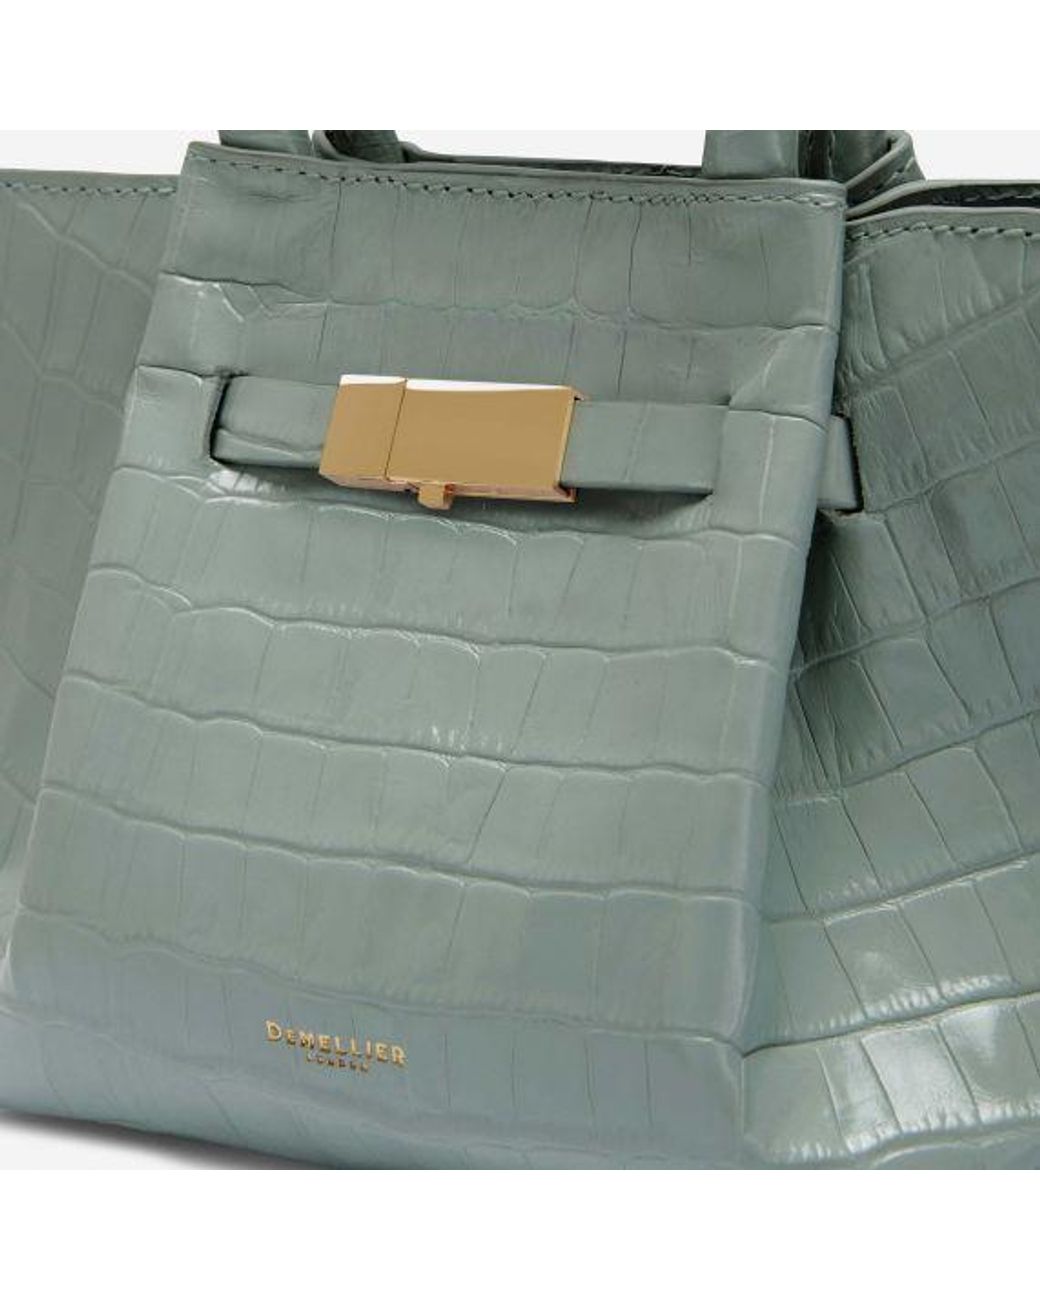 Demellier Women's Mini London Croc-Embossed Leather Crossbody Bag